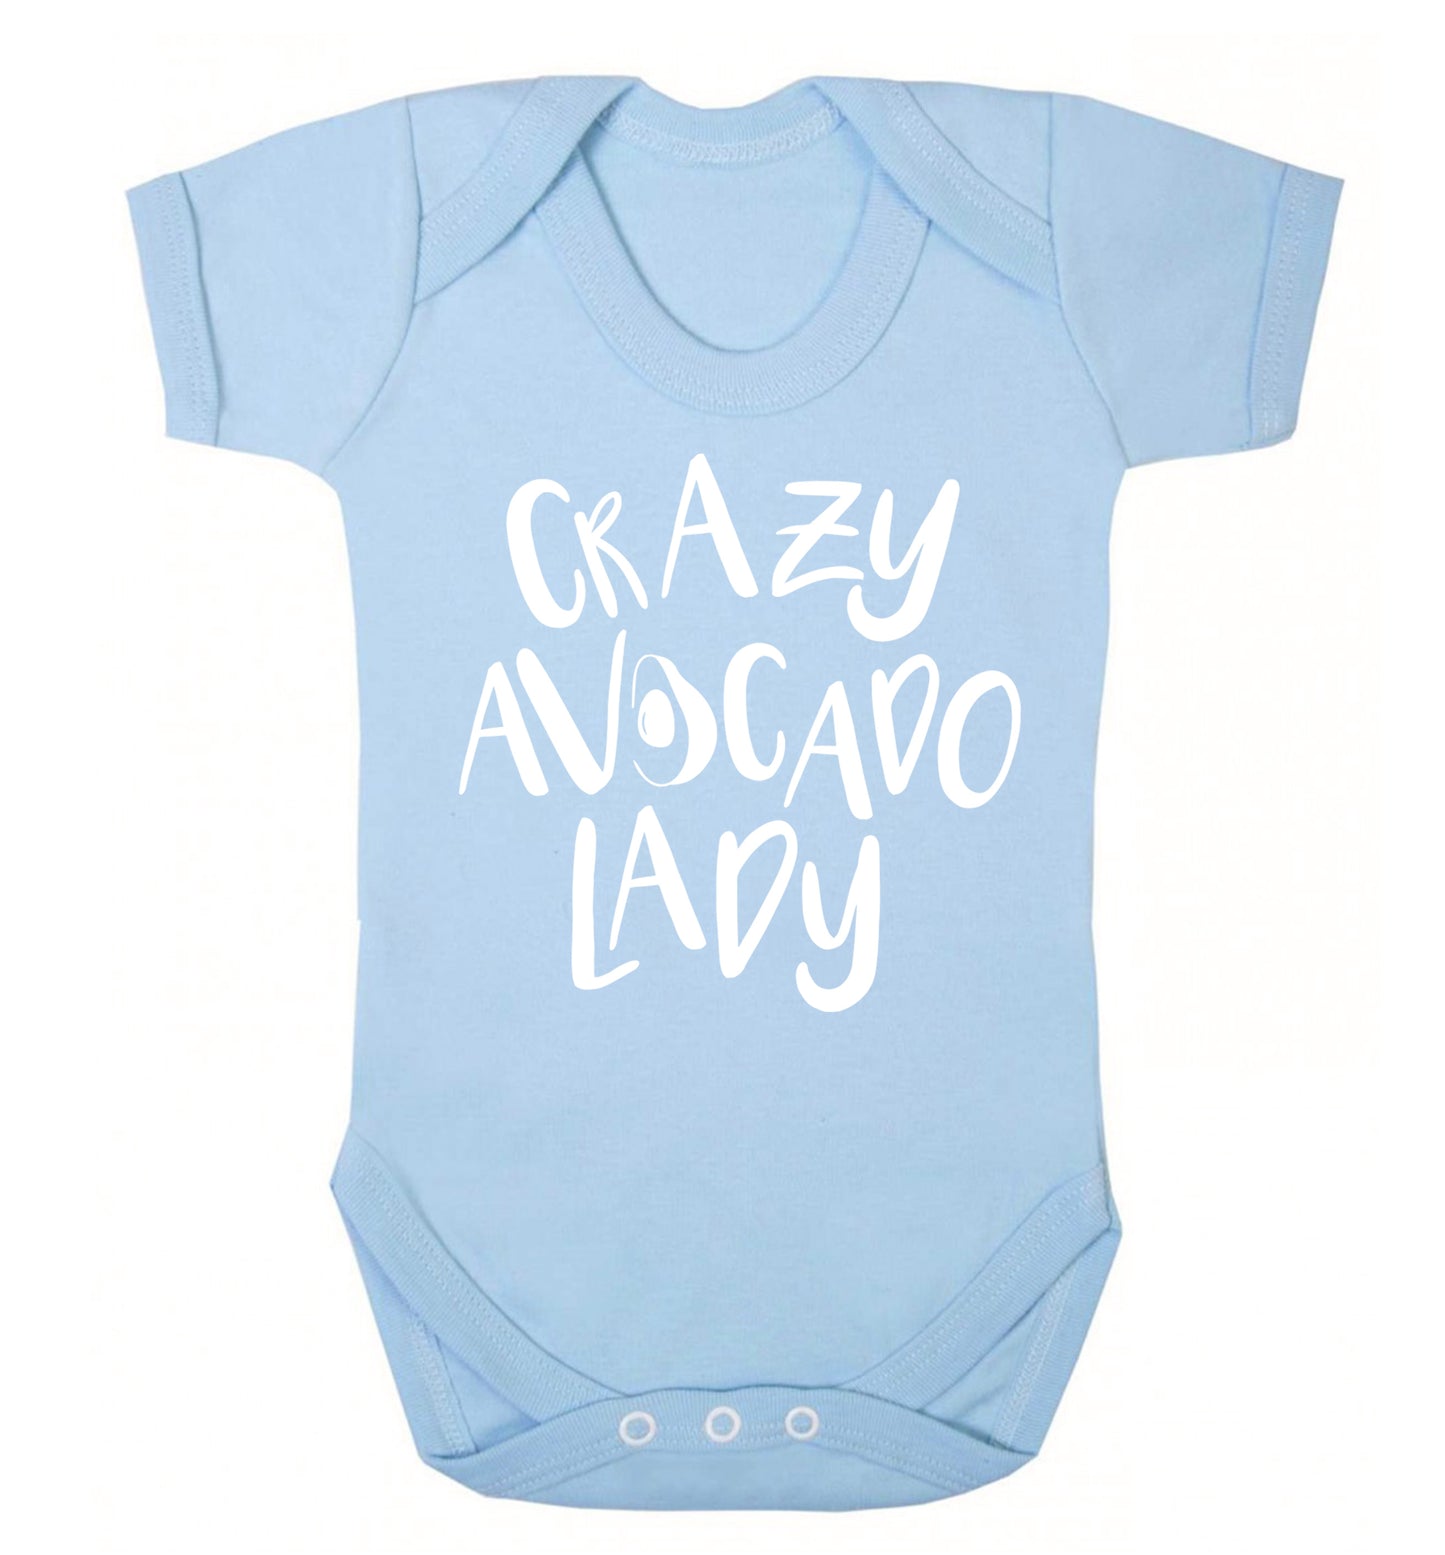 Crazy avocado lady Baby Vest pale blue 18-24 months